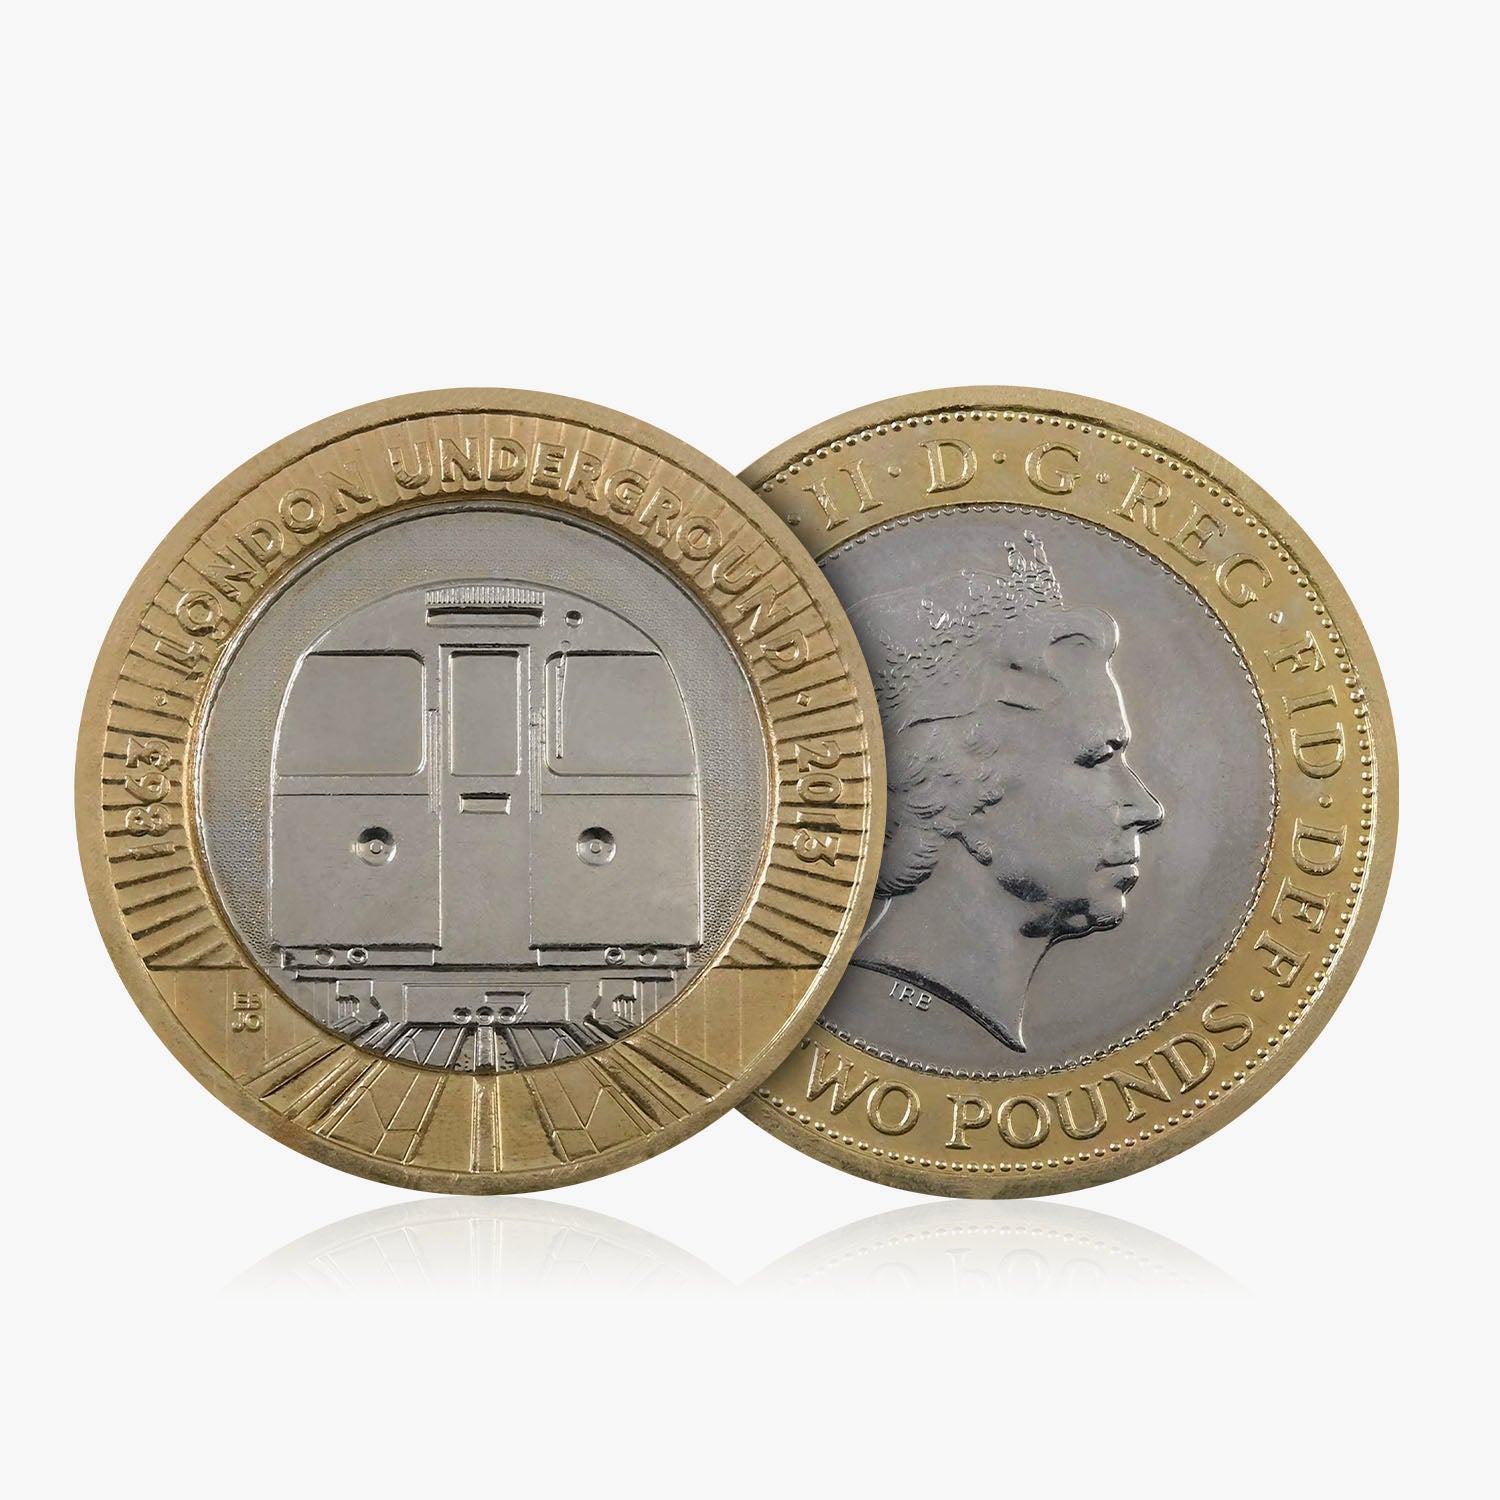 2013 Circulated London Underground Train UK £2 Coin